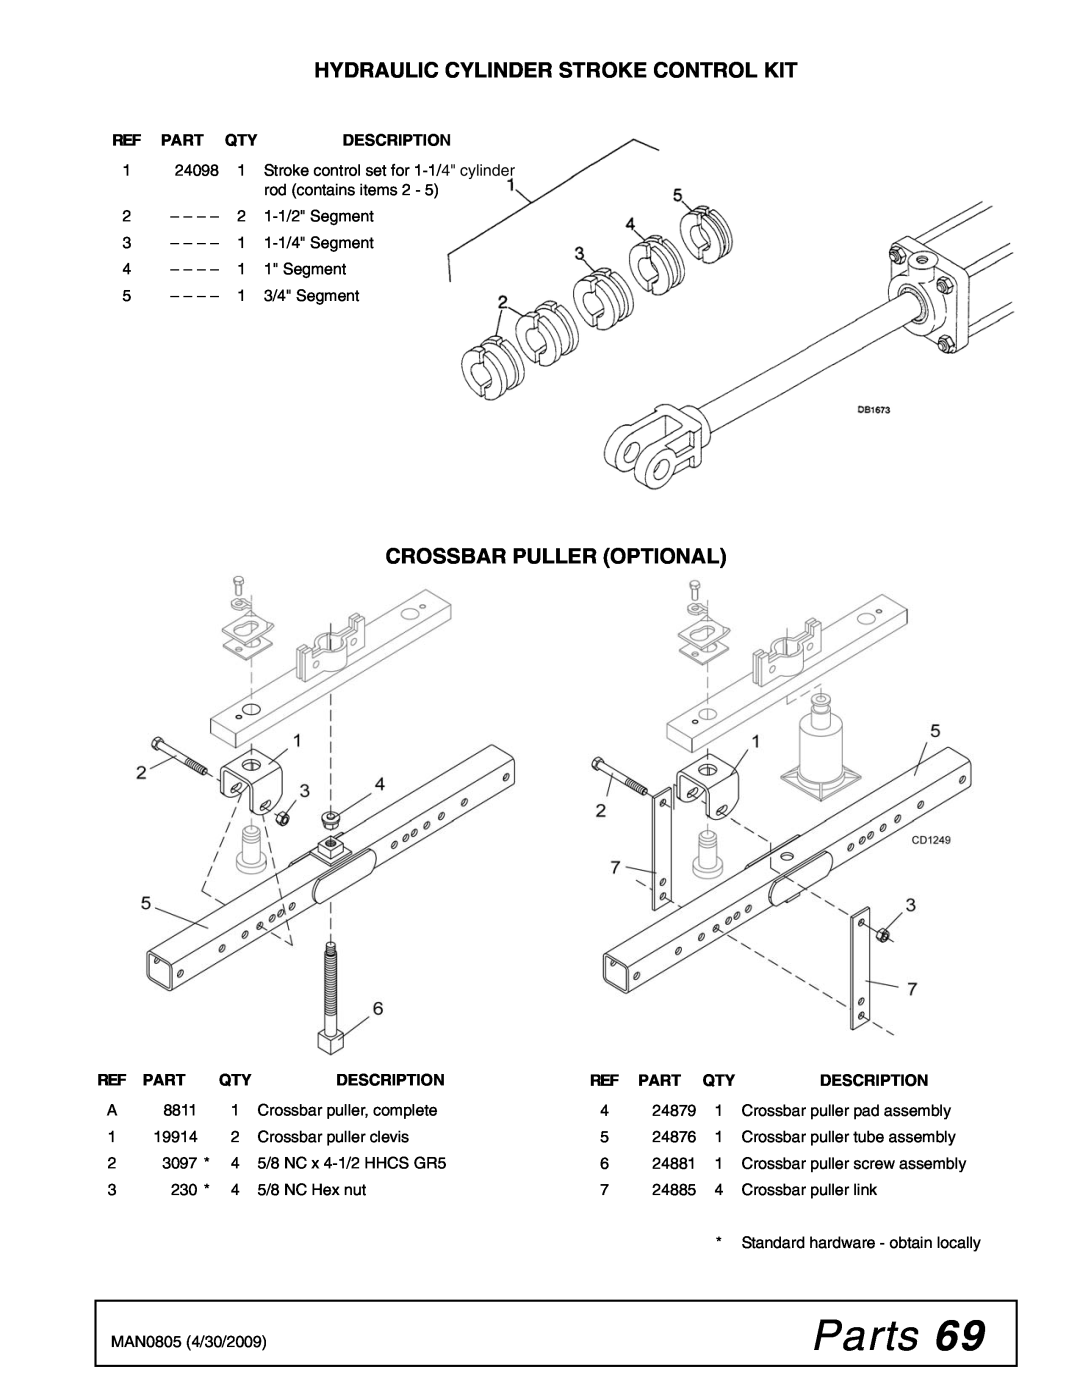 Woods Equipment BW180HB, BW180HD manual Parts, Crossbar Puller Optional, Hydraulic Cylinder Stroke Control Kit, Description 